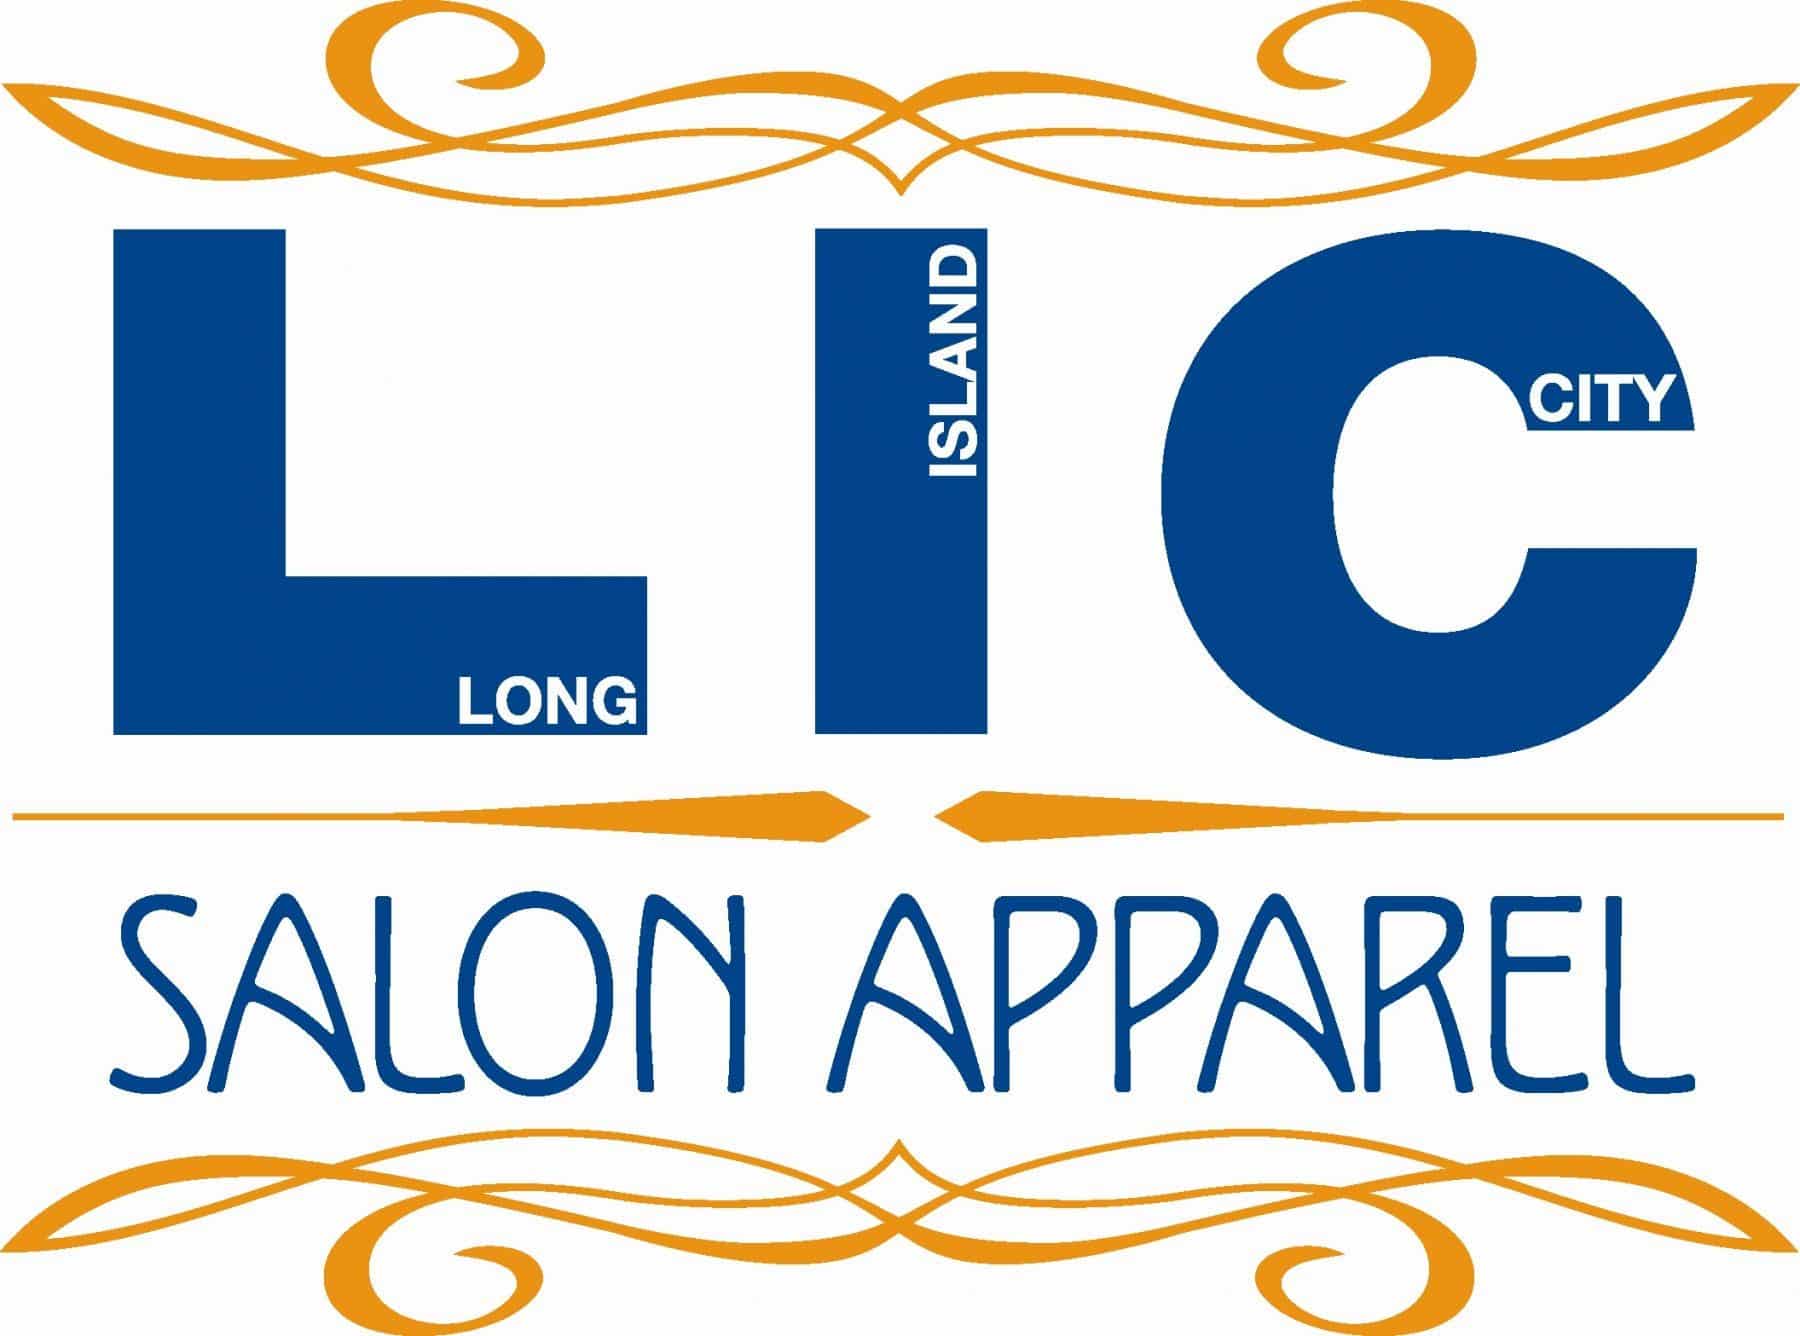 LIC Salon Apparel logo